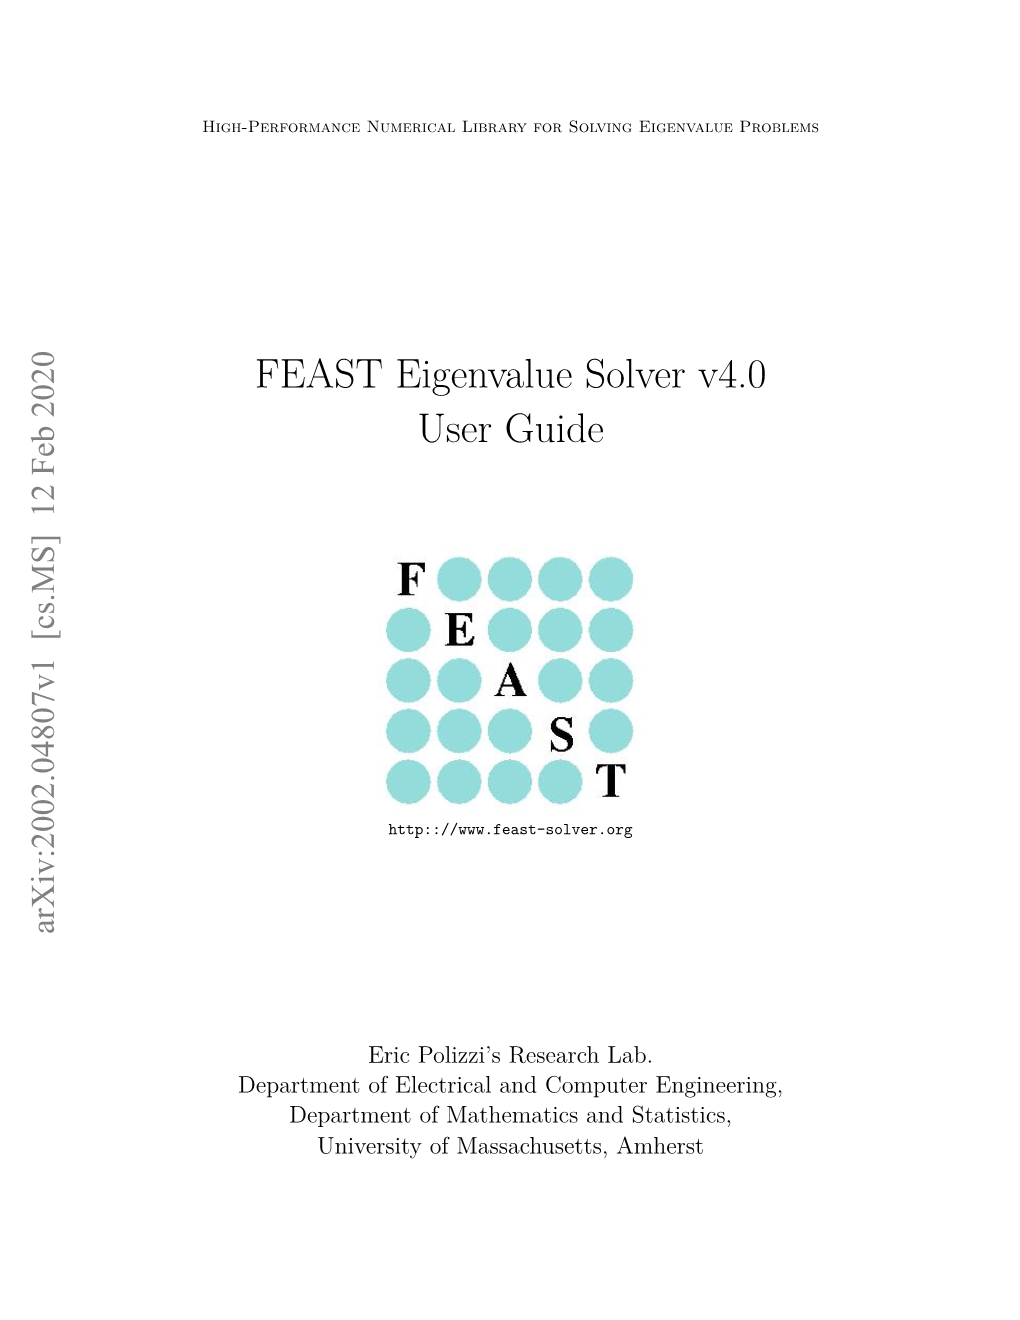 FEAST Eigenvalue Solver V4.0 User Guide